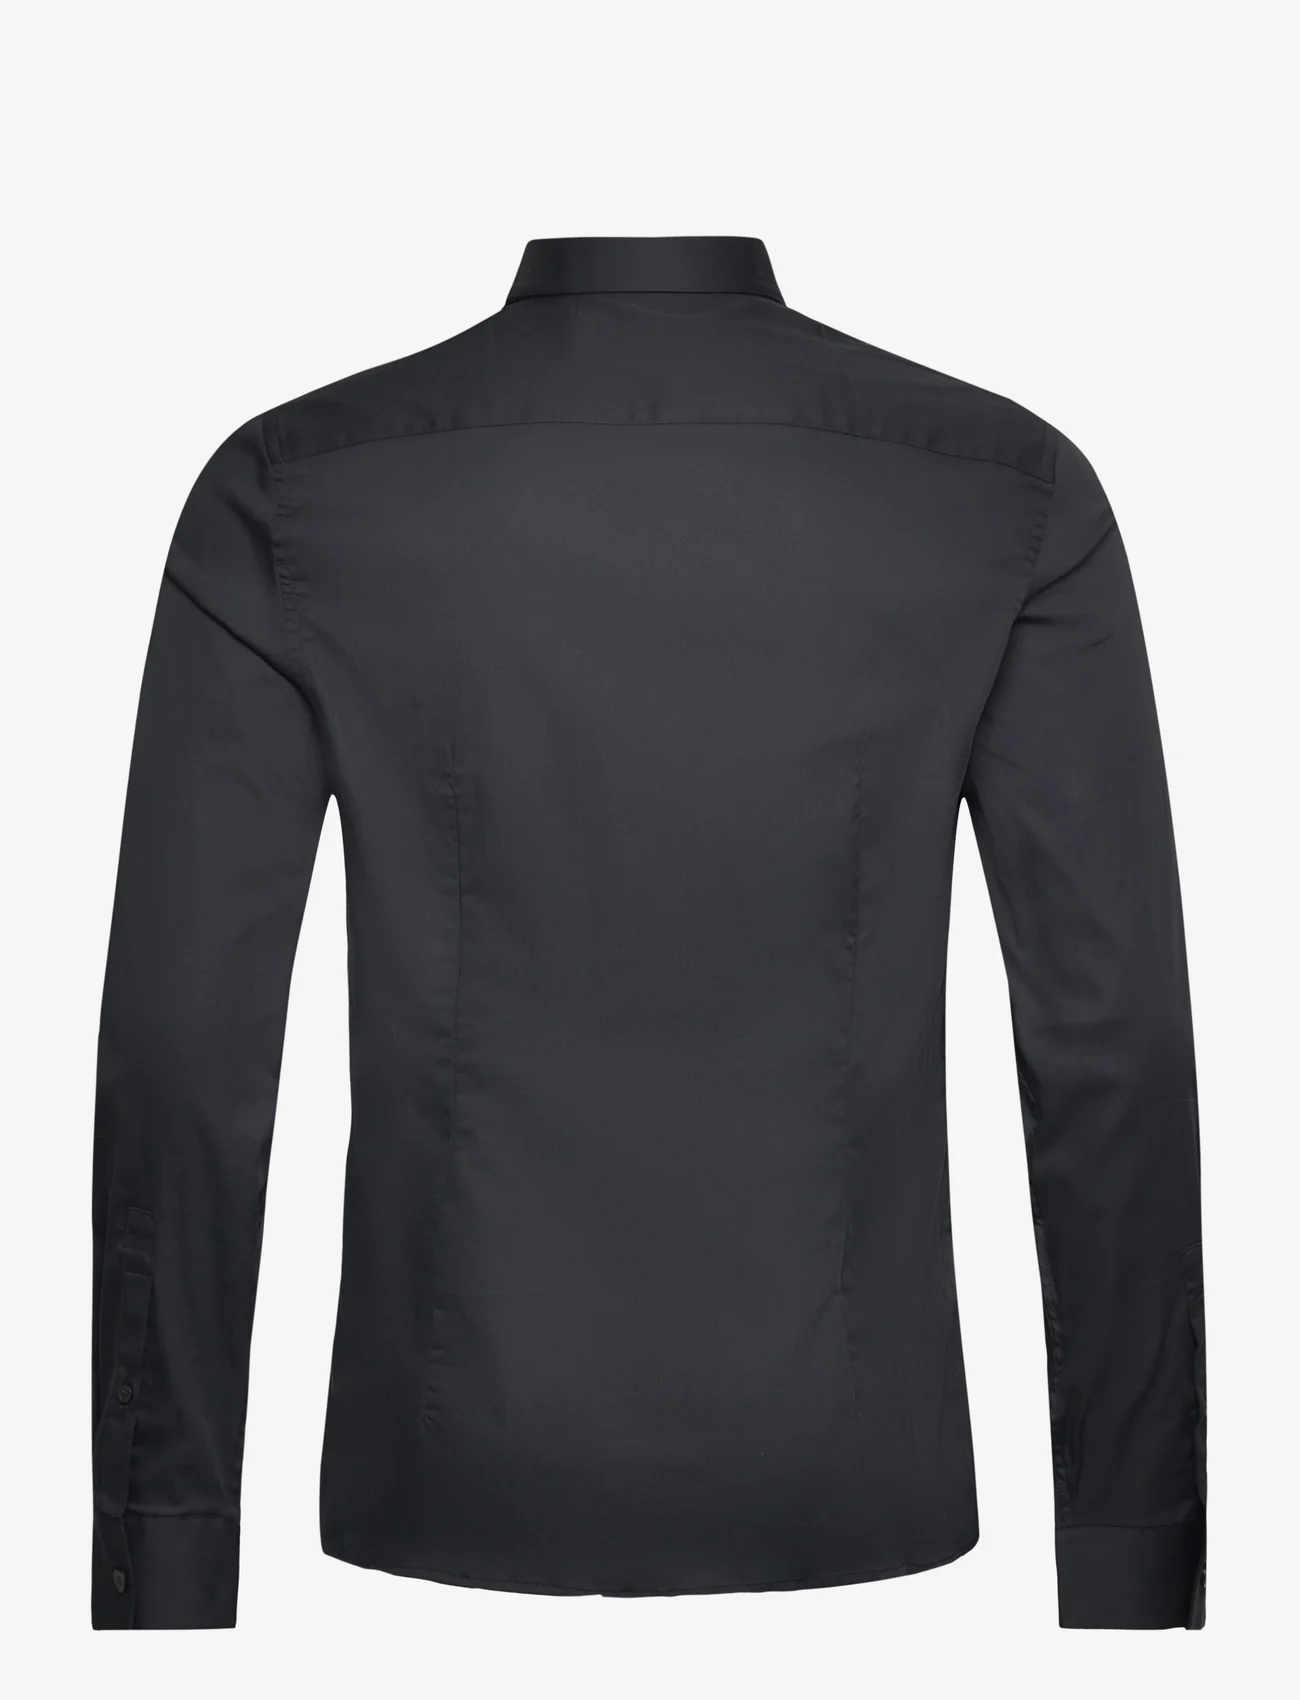 Mango - Super slim-fit poplin suit shirt - basic skjortor - black - 1